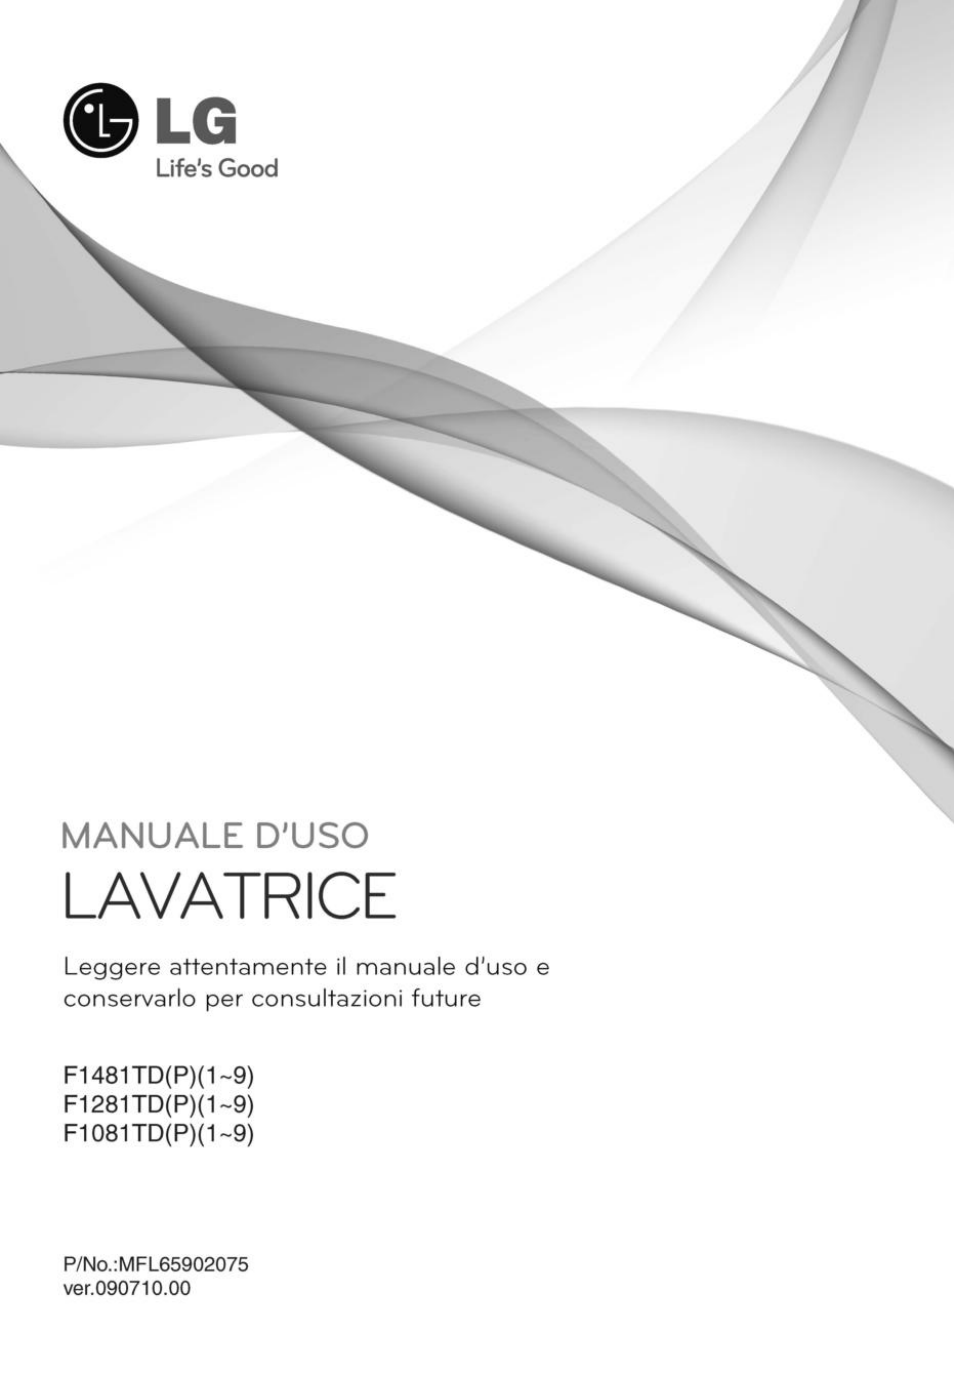 LG F1281TD Manuale d'uso | Pagine: 36